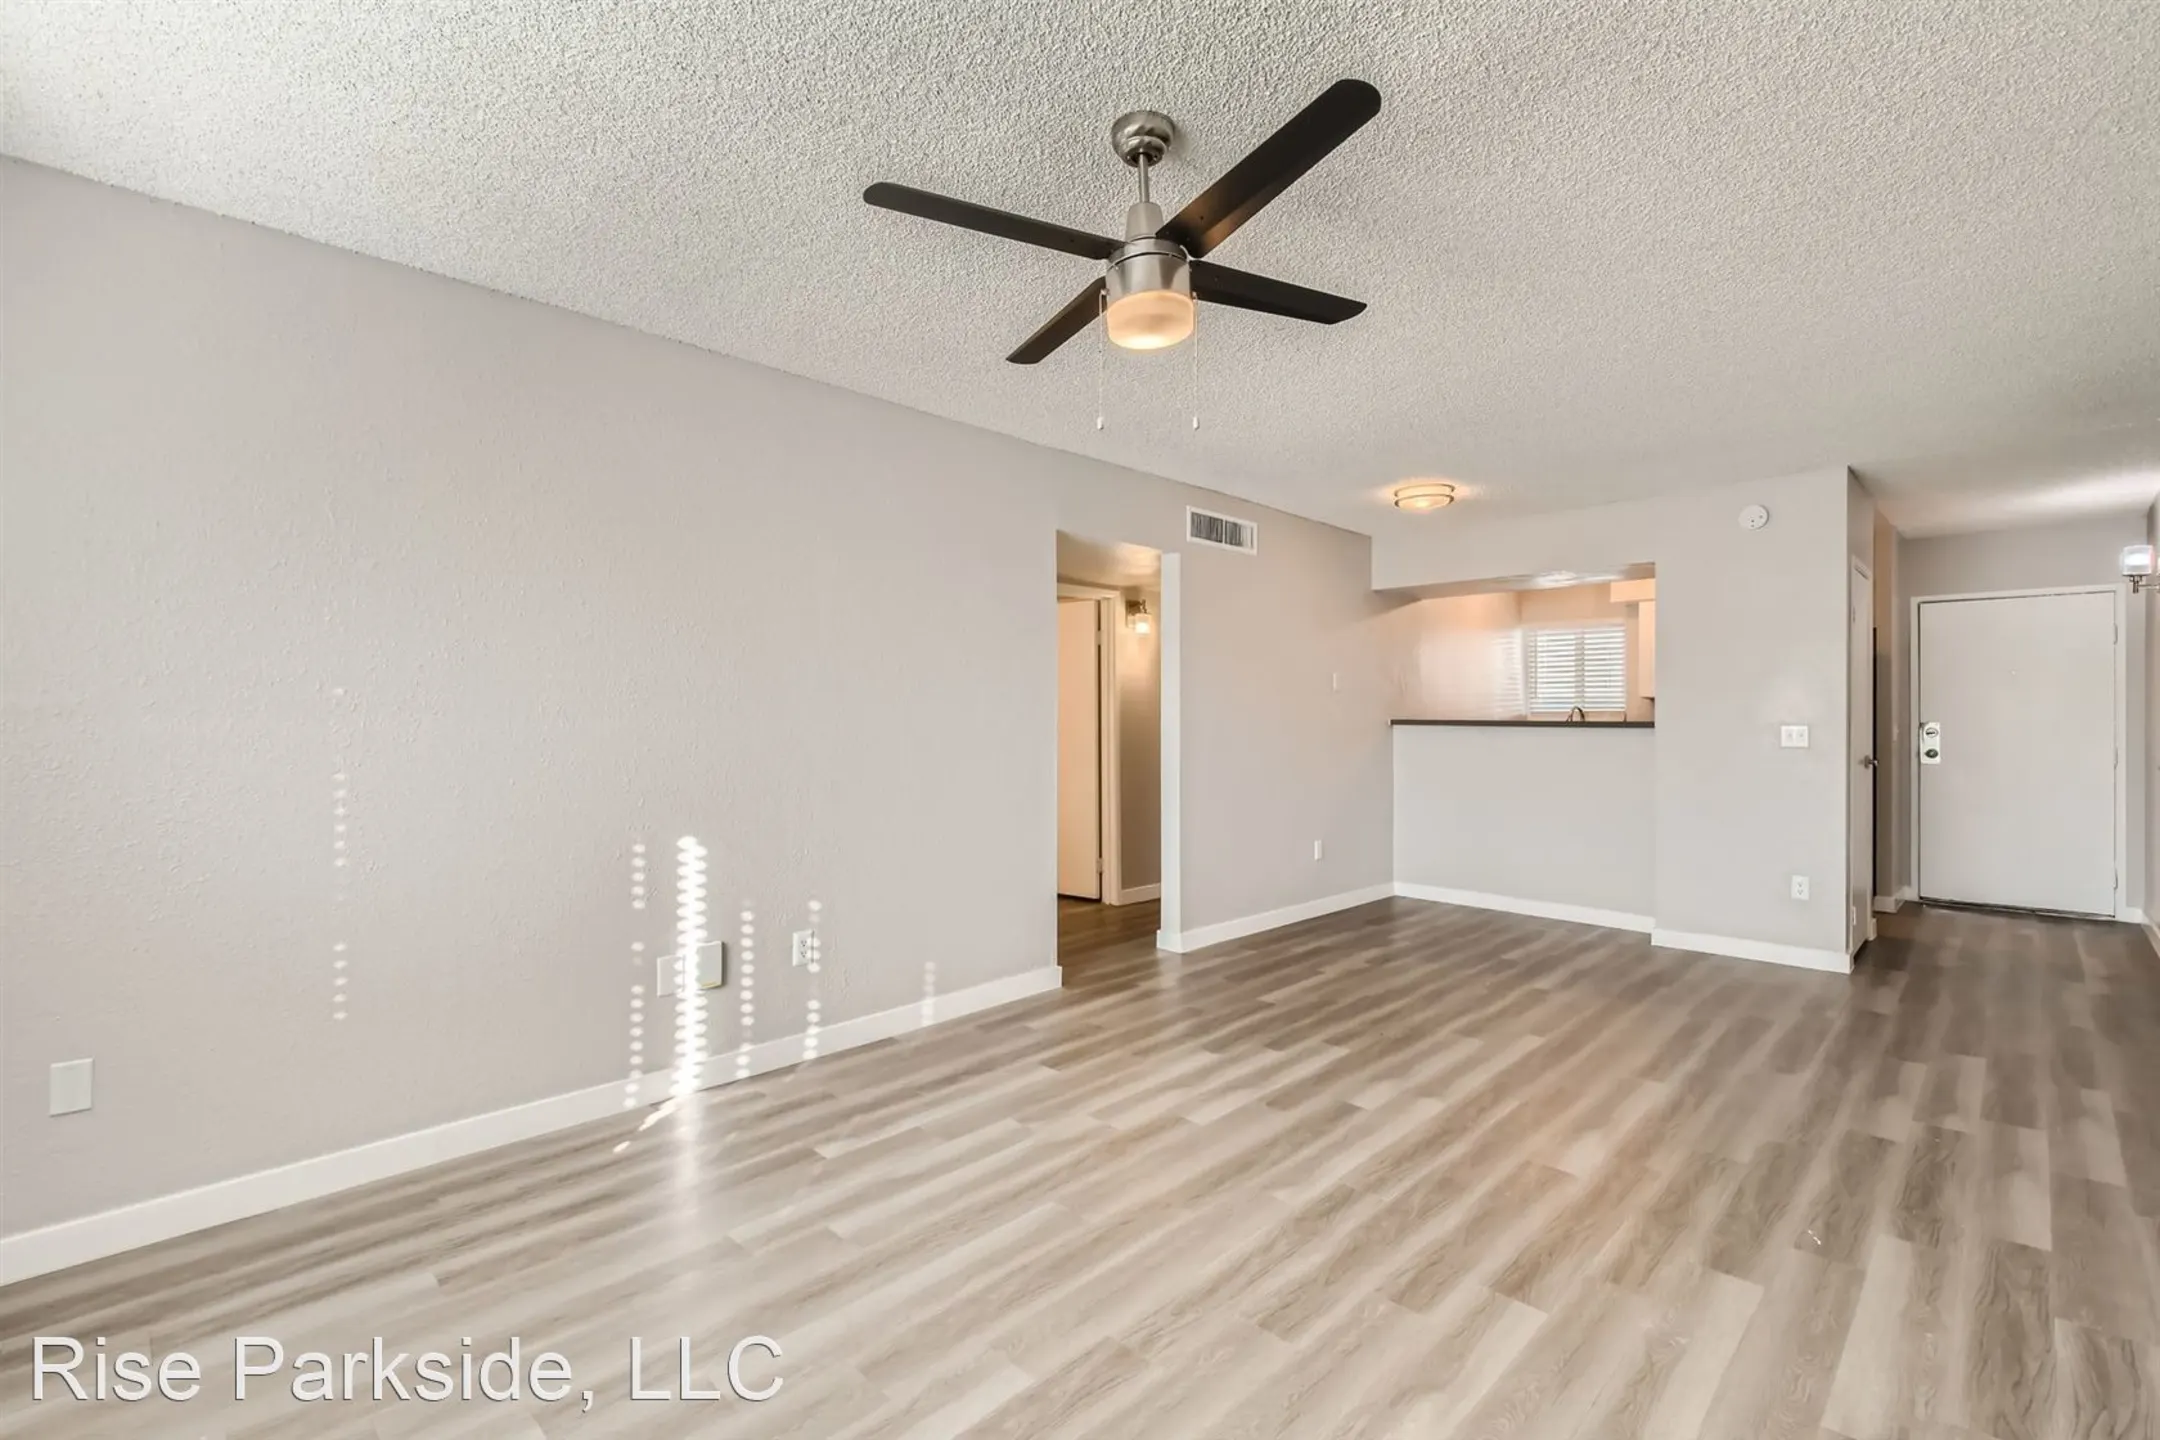 Rise Parkside - 7102 N 43rd Ave | Glendale, AZ Apartments for Rent | Rent.